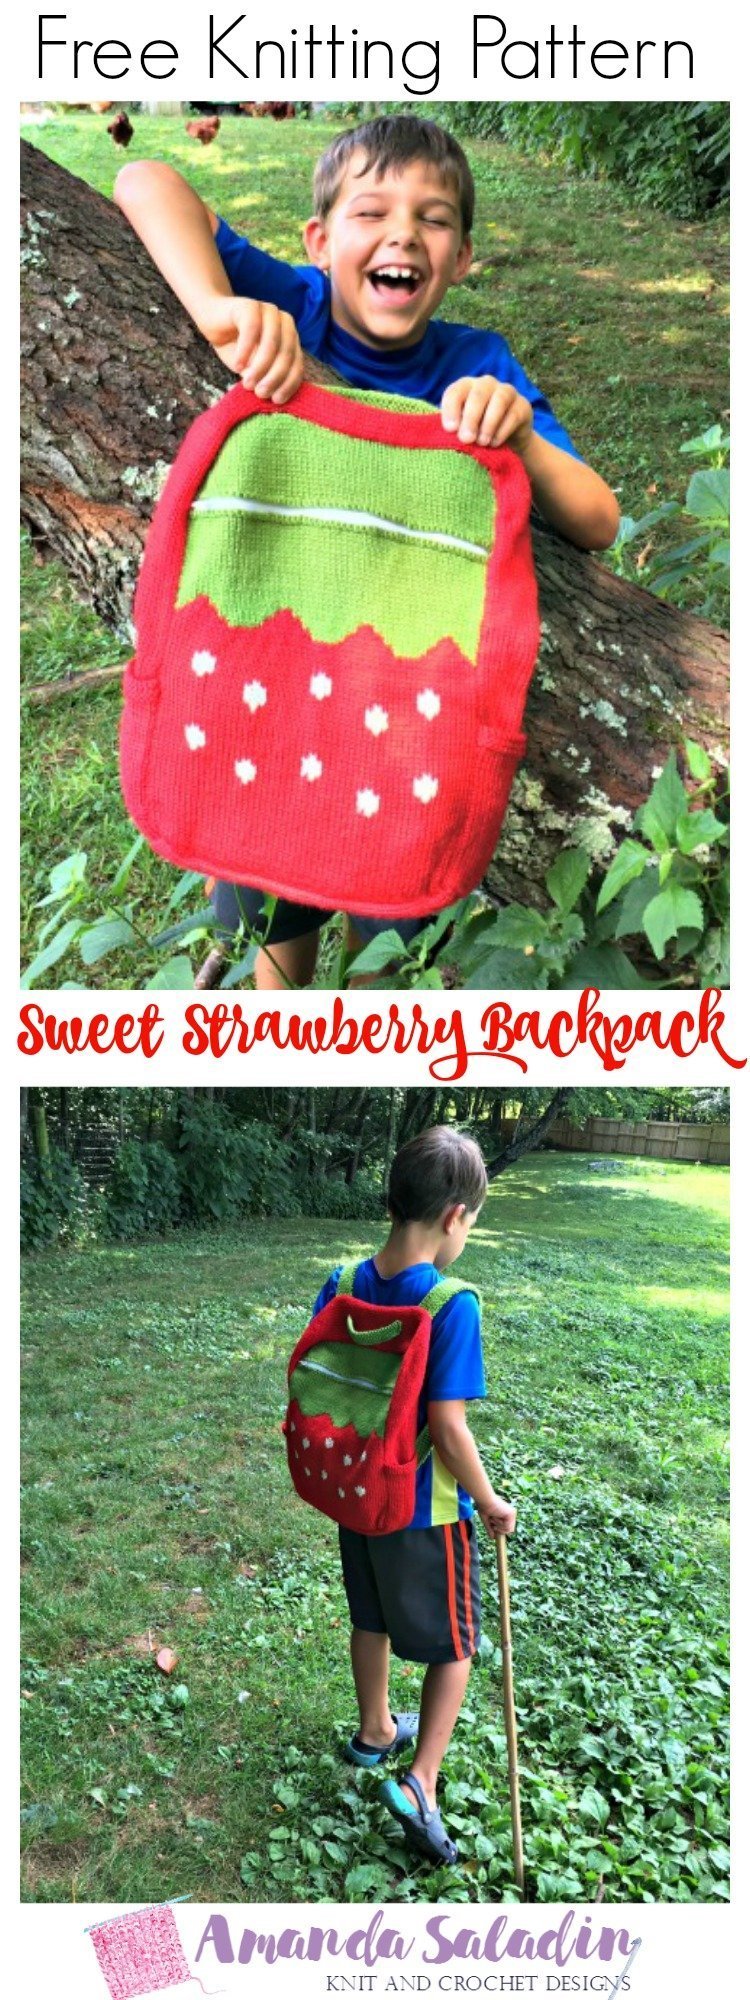 Free Knitting Pattern - Sweet Strawberry Backpack